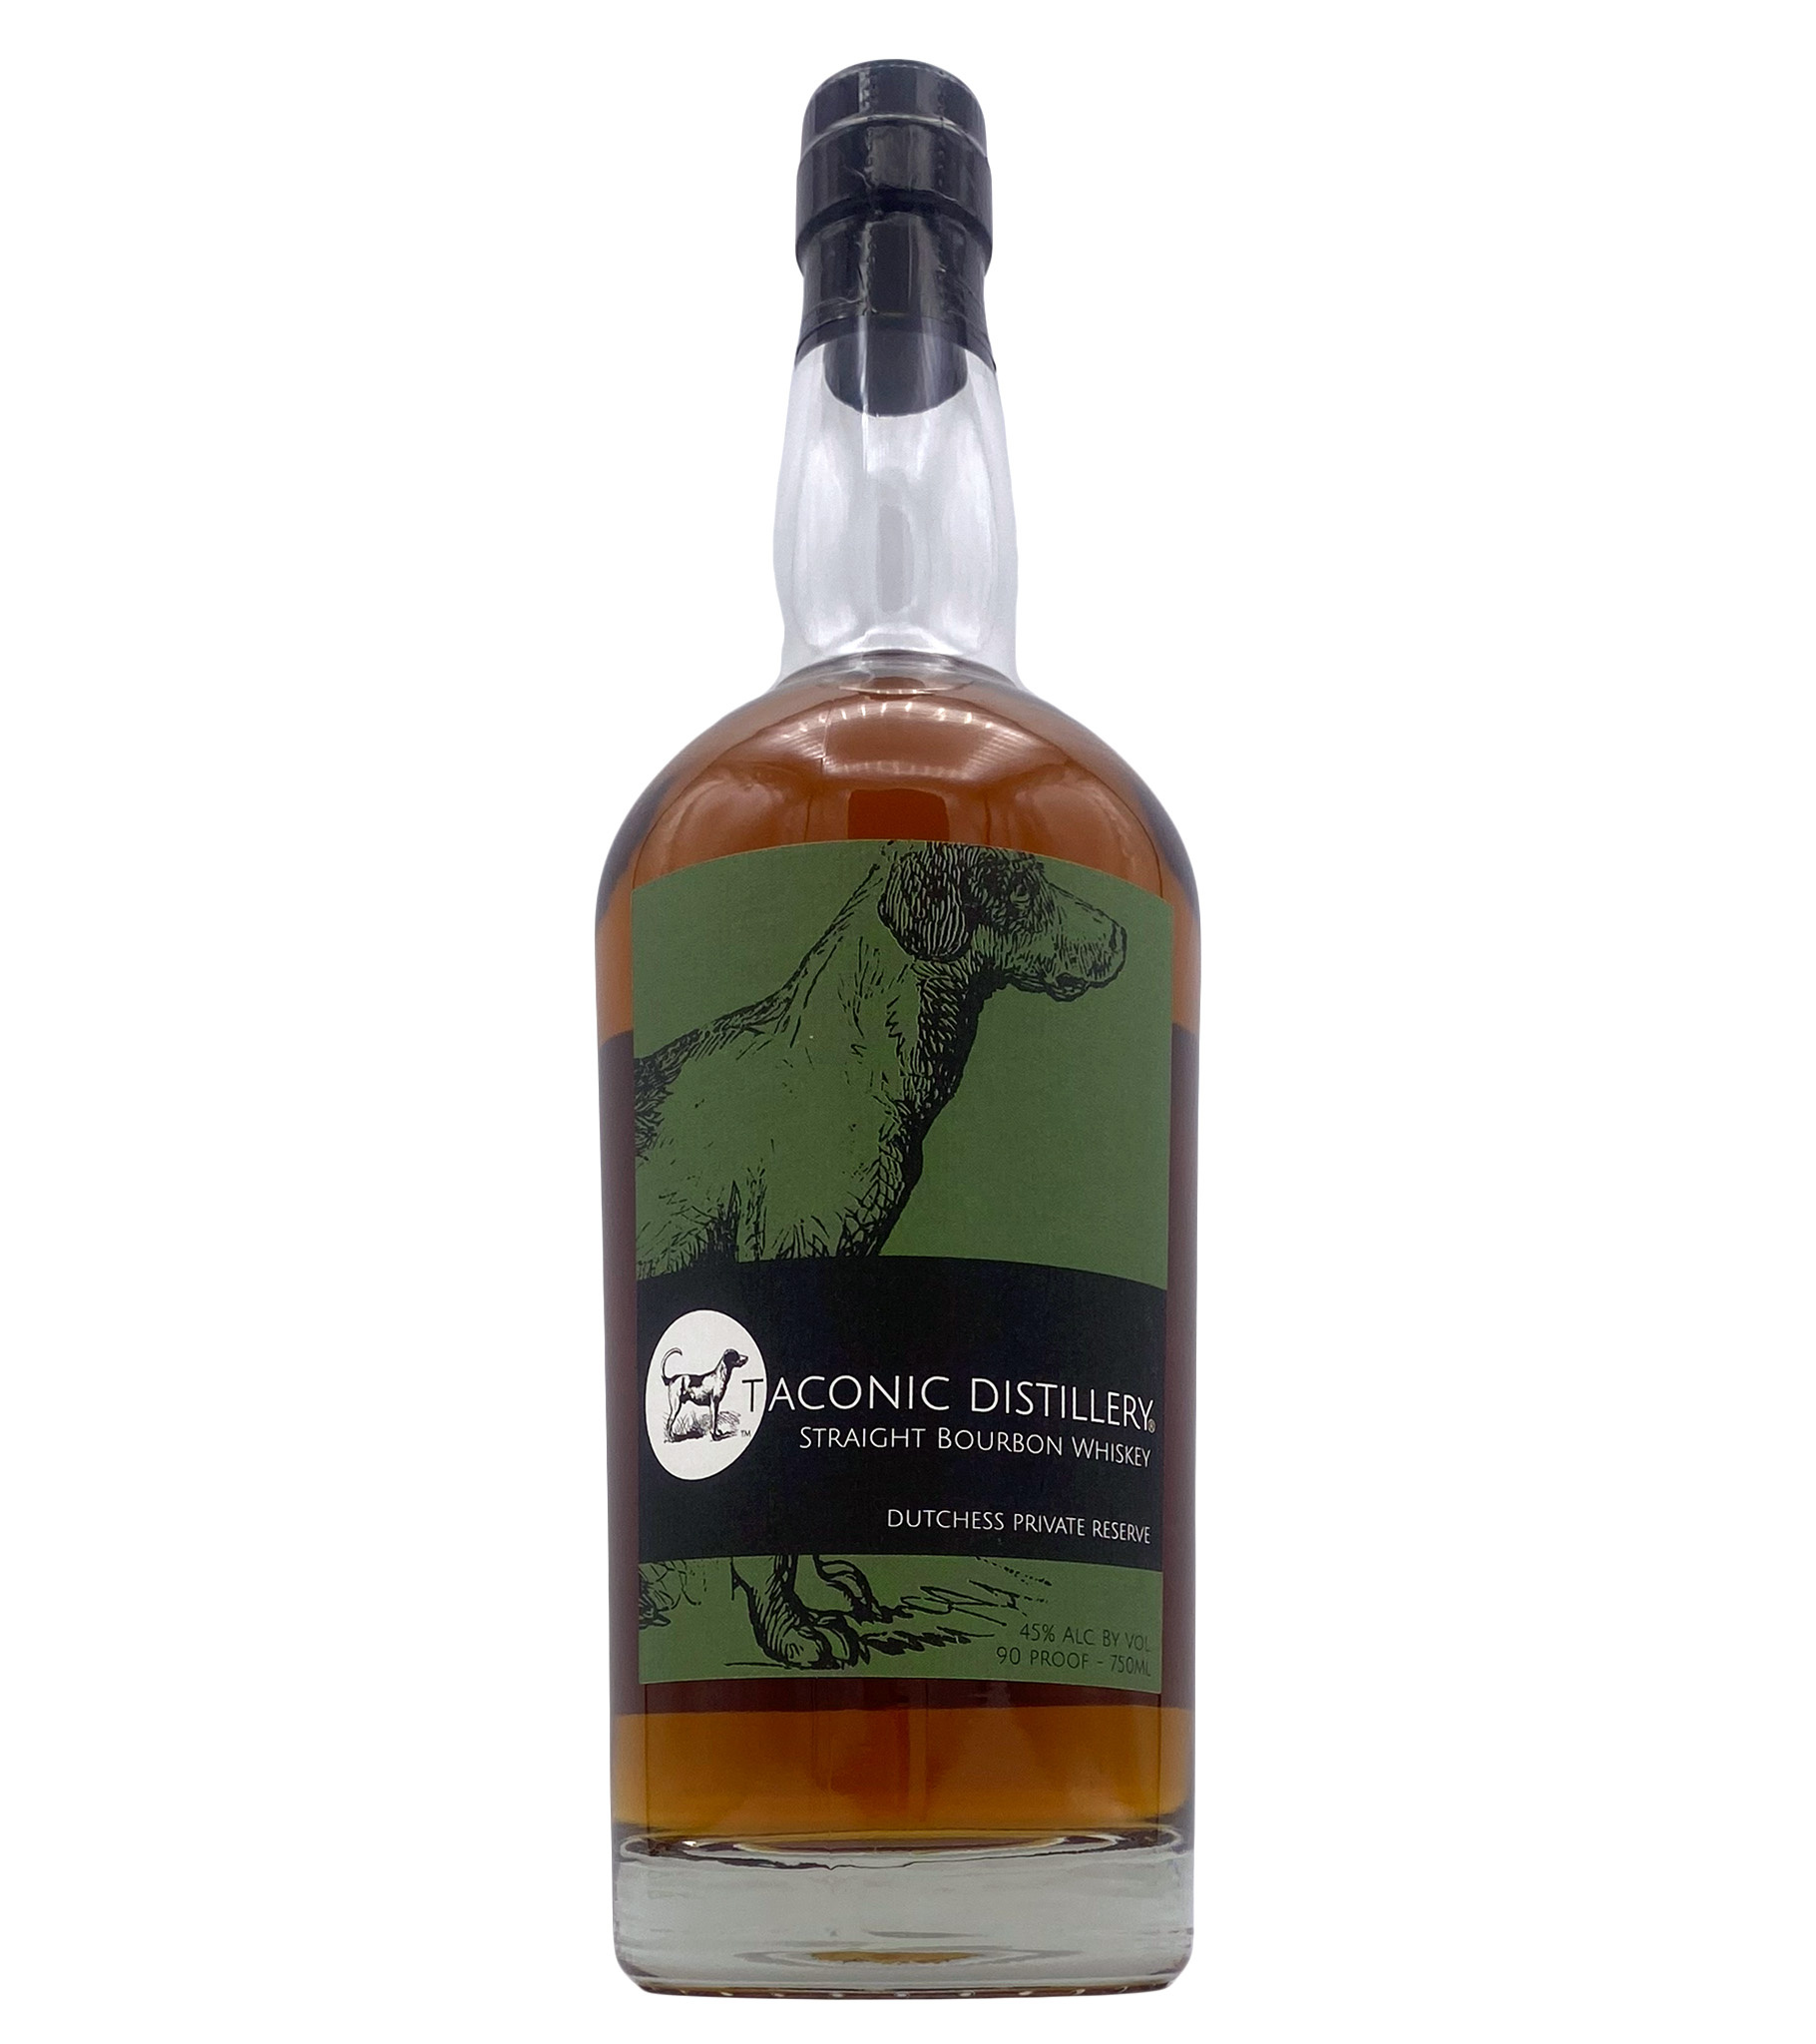 Taconic Straight Bourbon, Dutchess Private Reserve